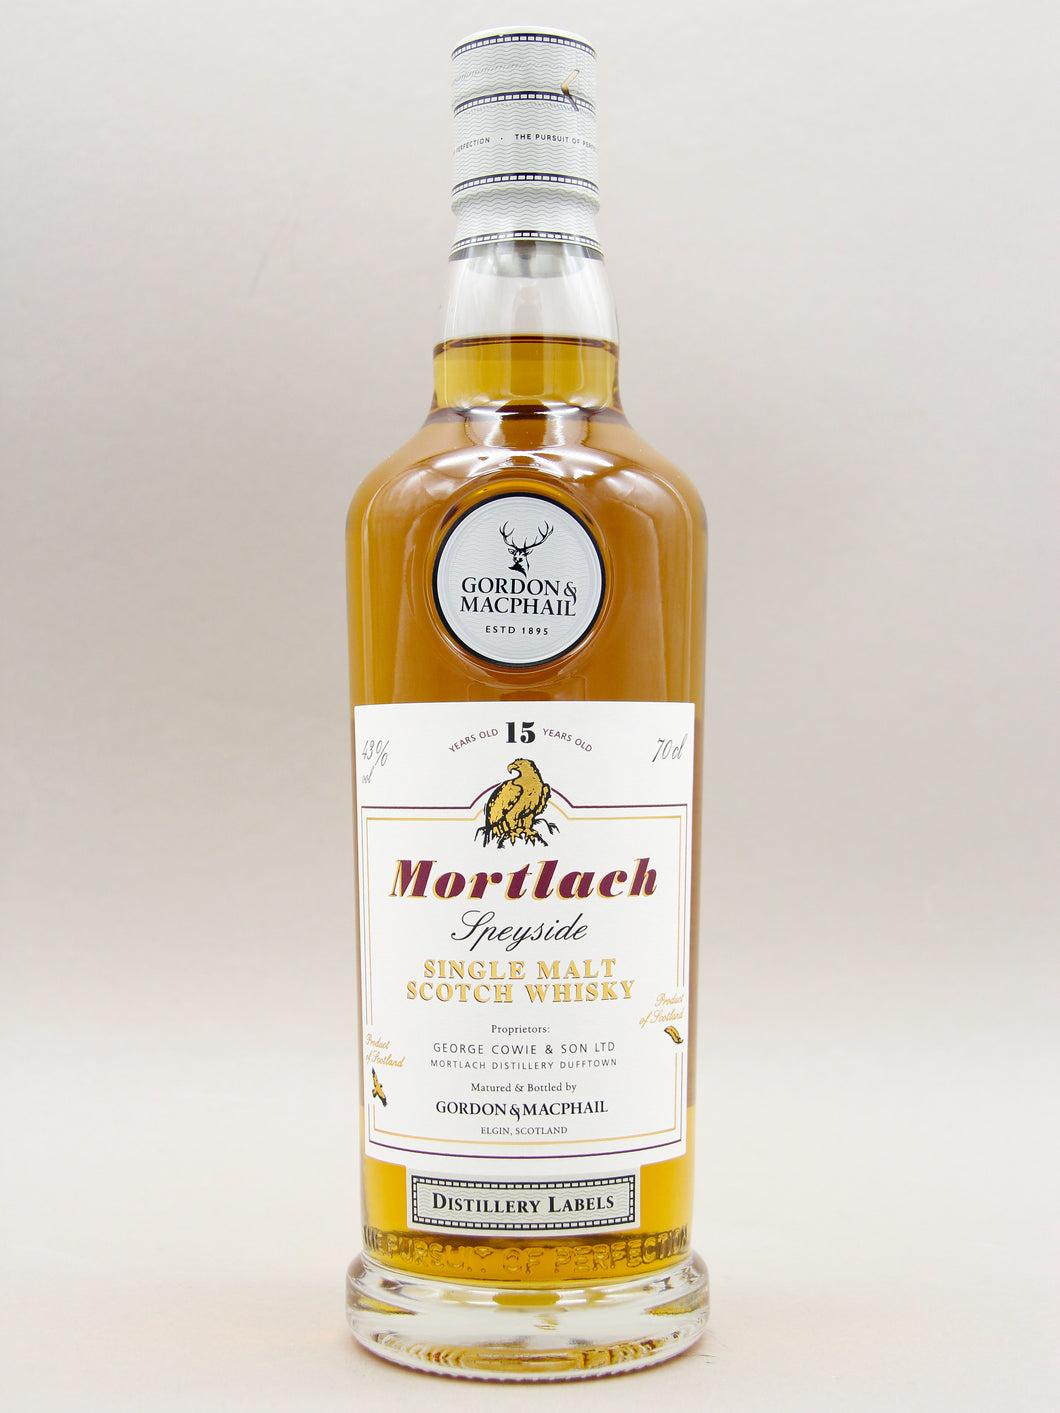 Gordon & Macphail, Distillery Labels, Mortlach 15 Years, Single Malt Scotch Whisky (43%, 70cl)